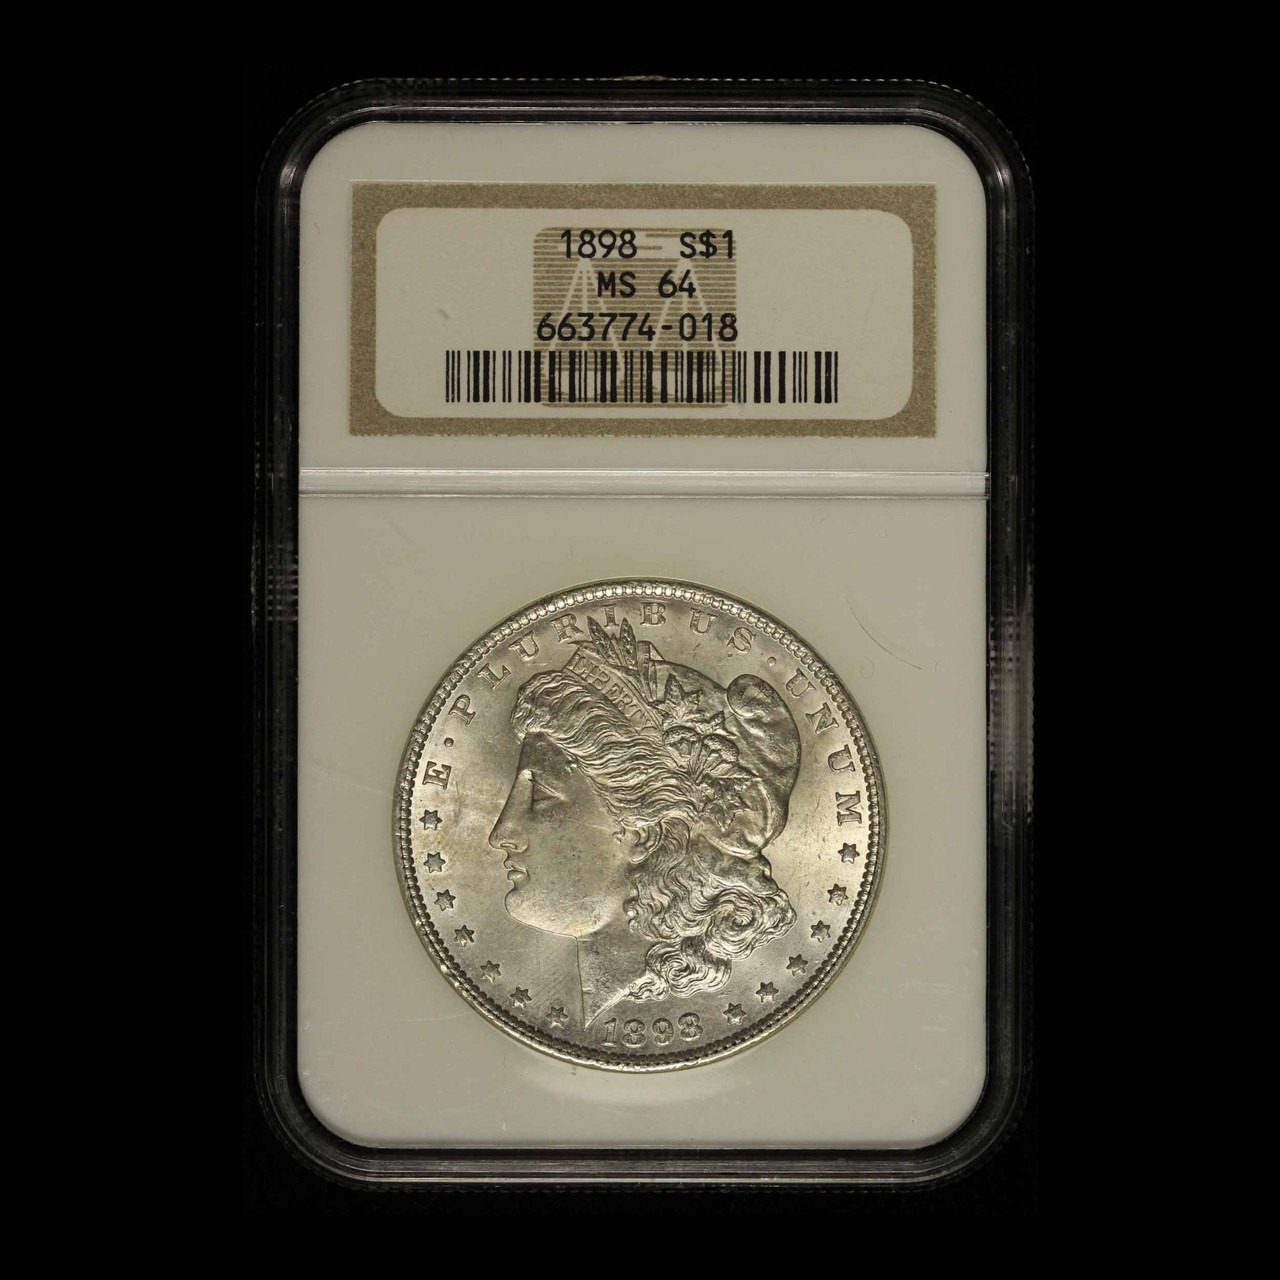 1898 $1 Morgan Silver Dollar NGC MS64 Old Brown Label - Free